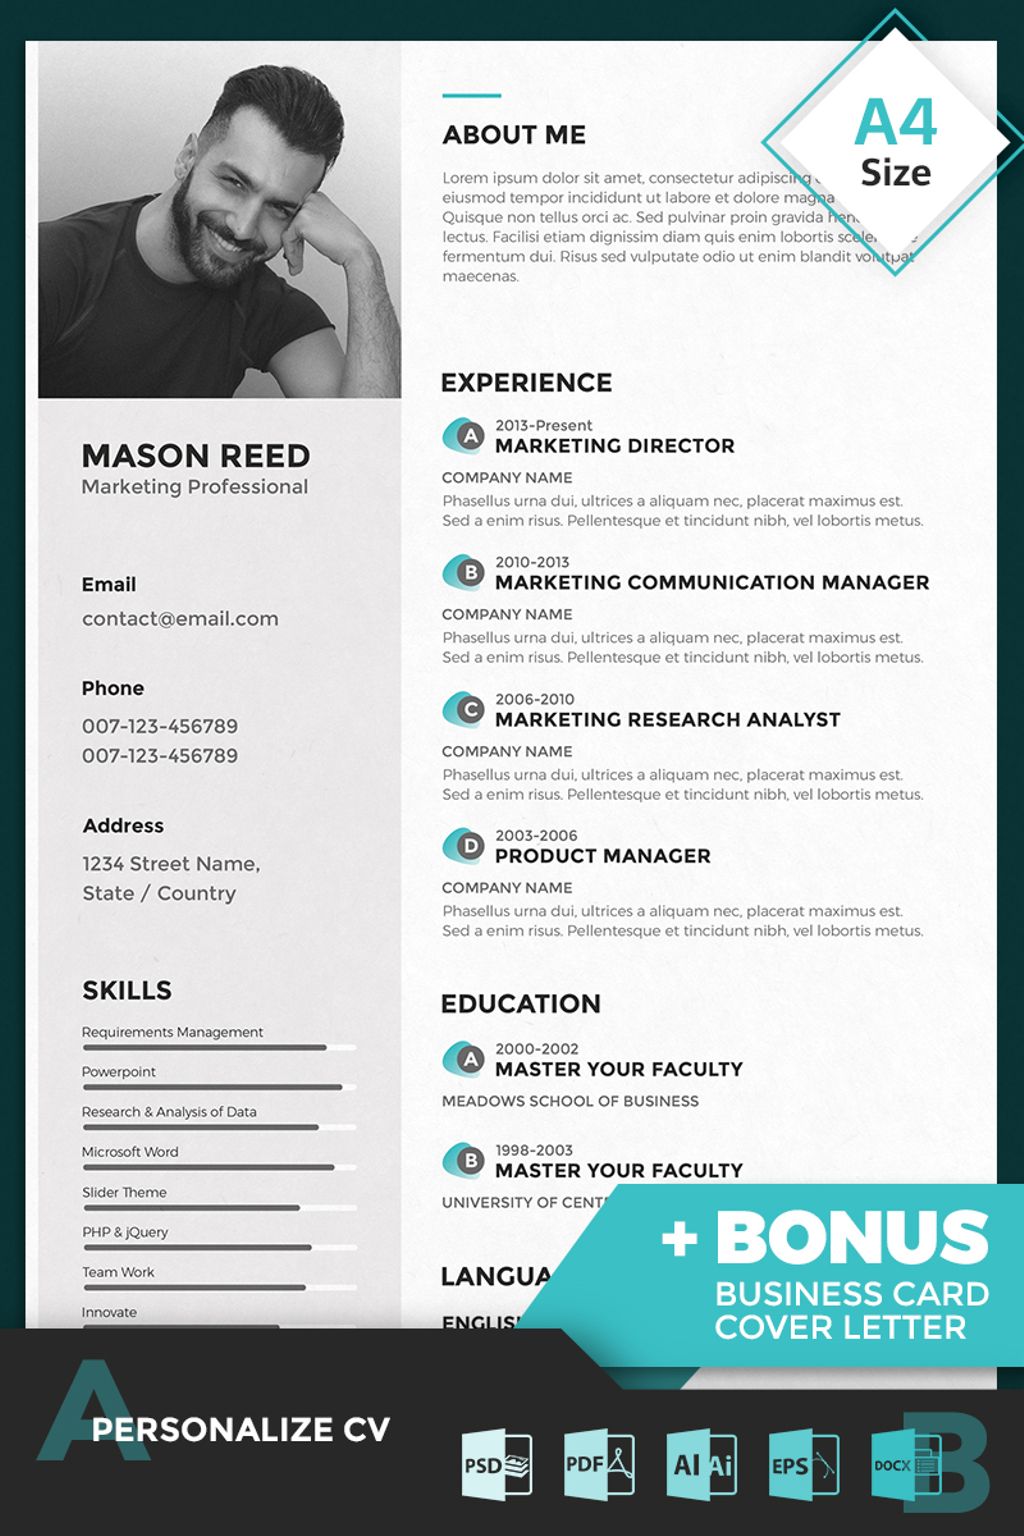 Mason Reed - Marketing Professional Resume Template